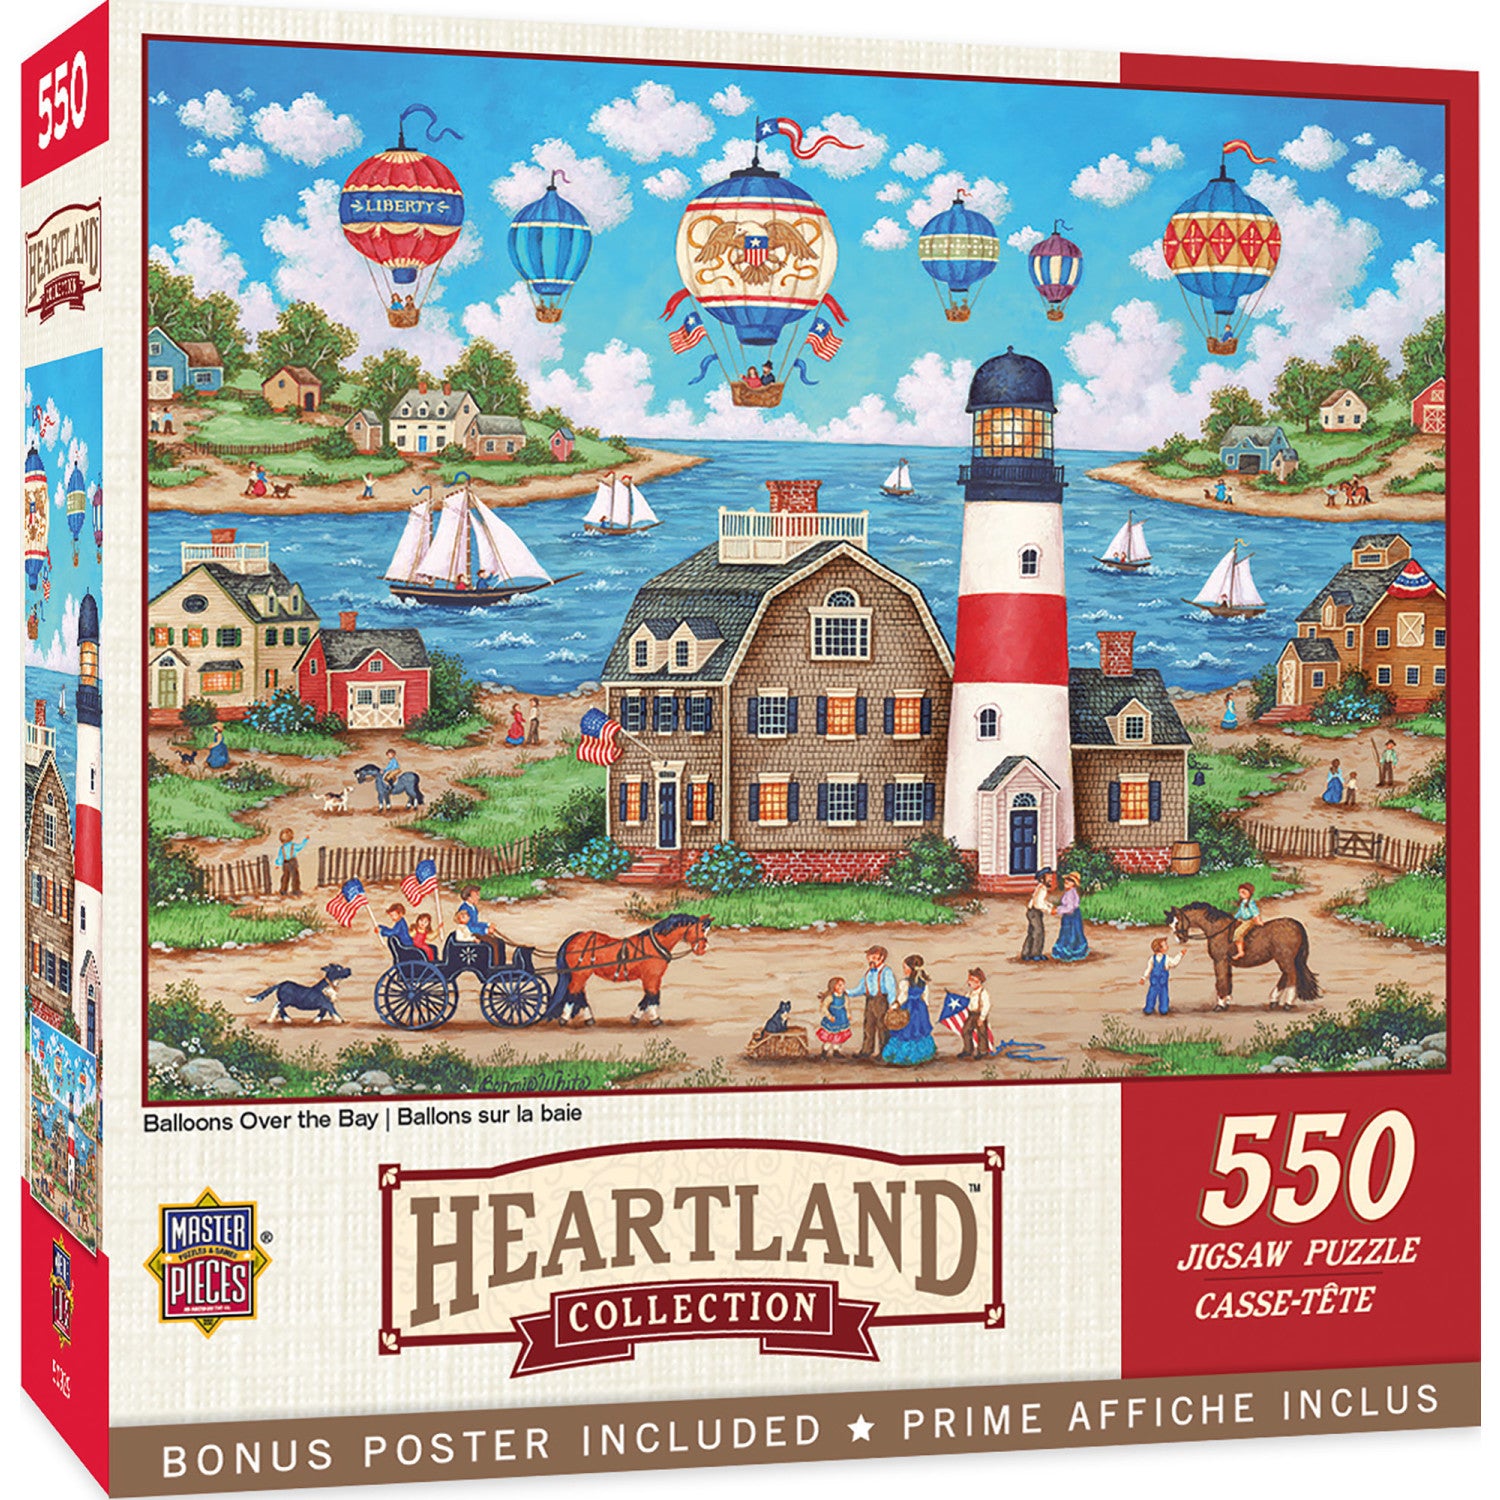 Heartland - Balloons Over the Bay 550 Piece Jigsaw Puzzle